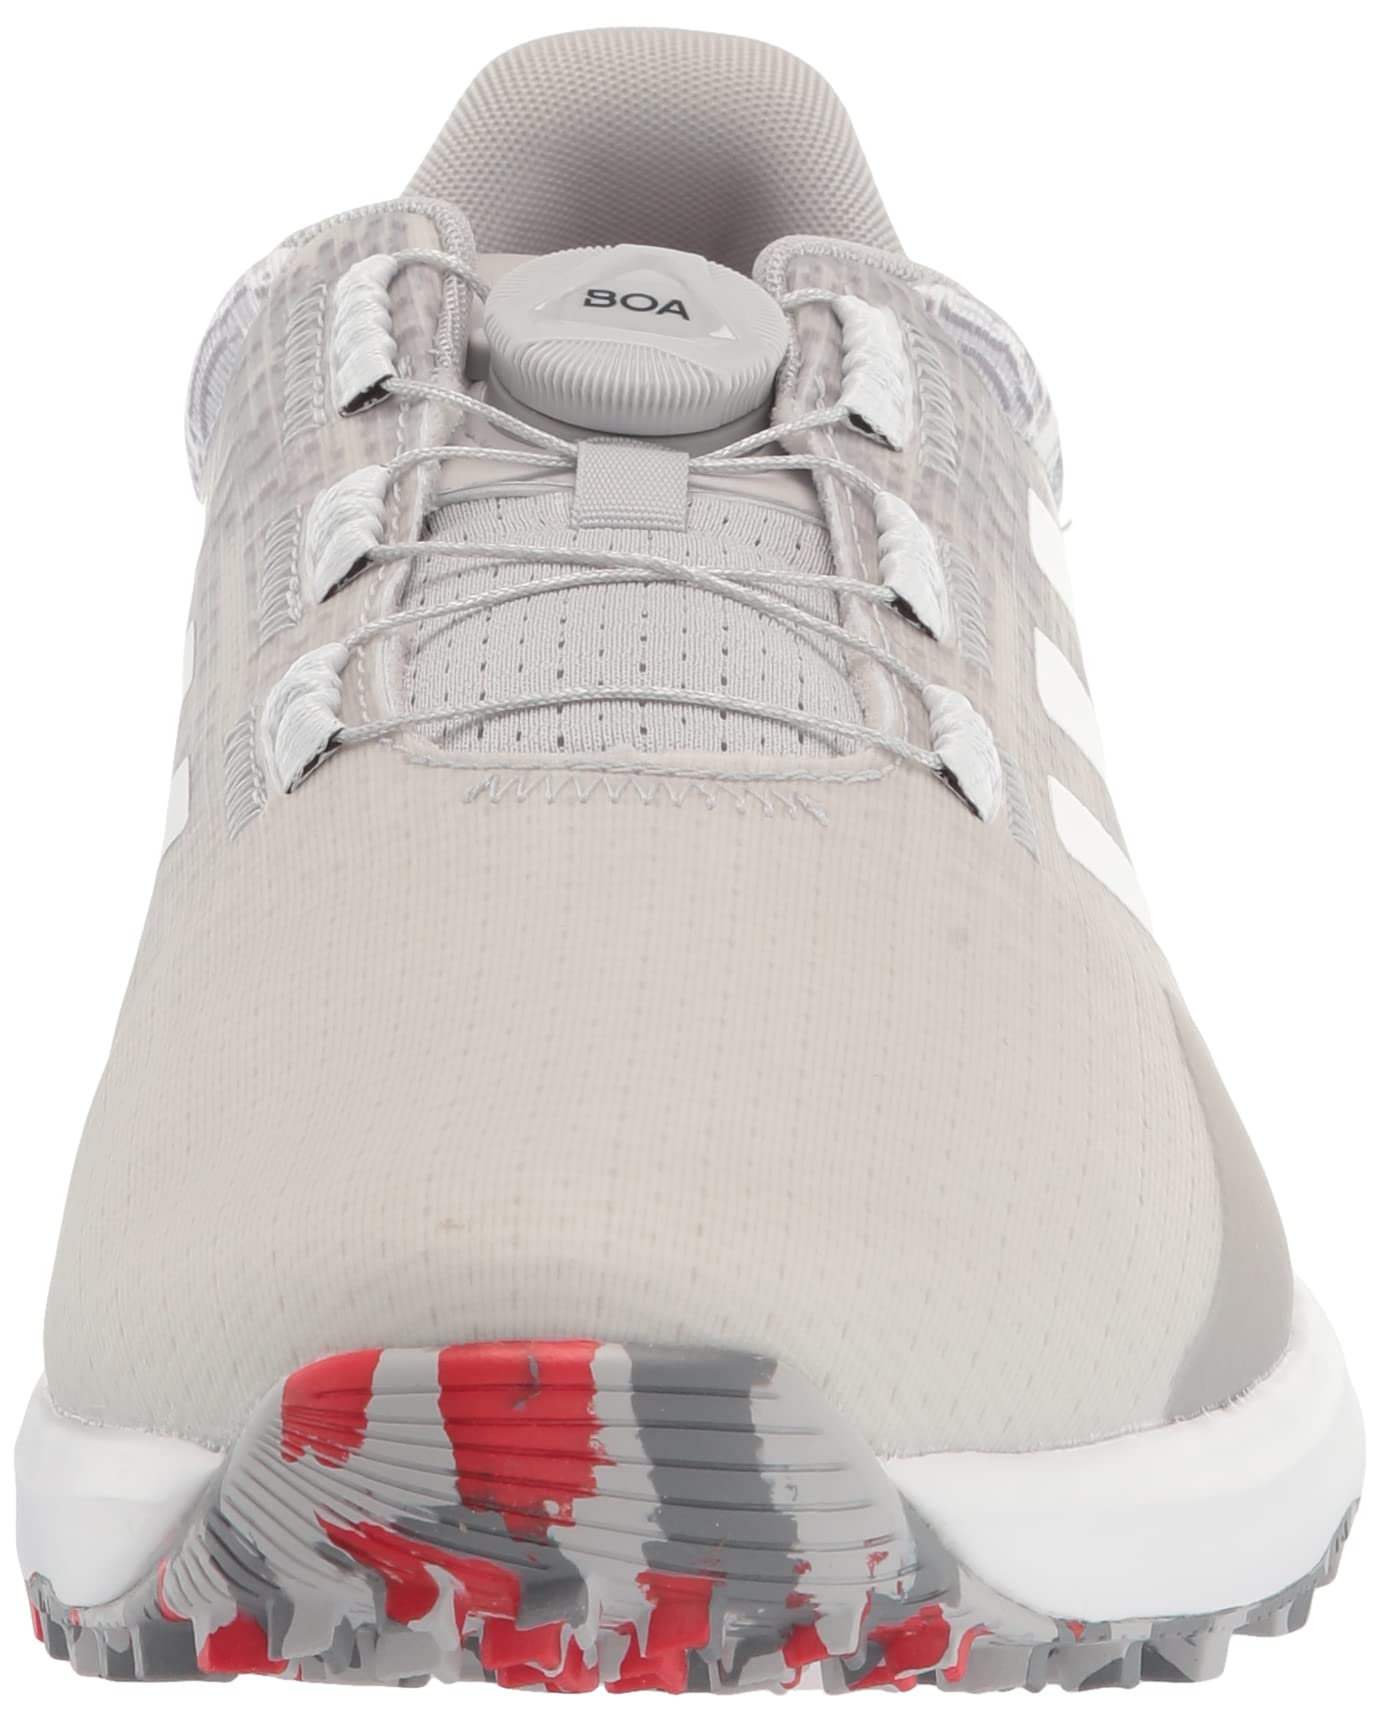 adidas Men's S2g Boa Wide Spikeless Golf Shoes